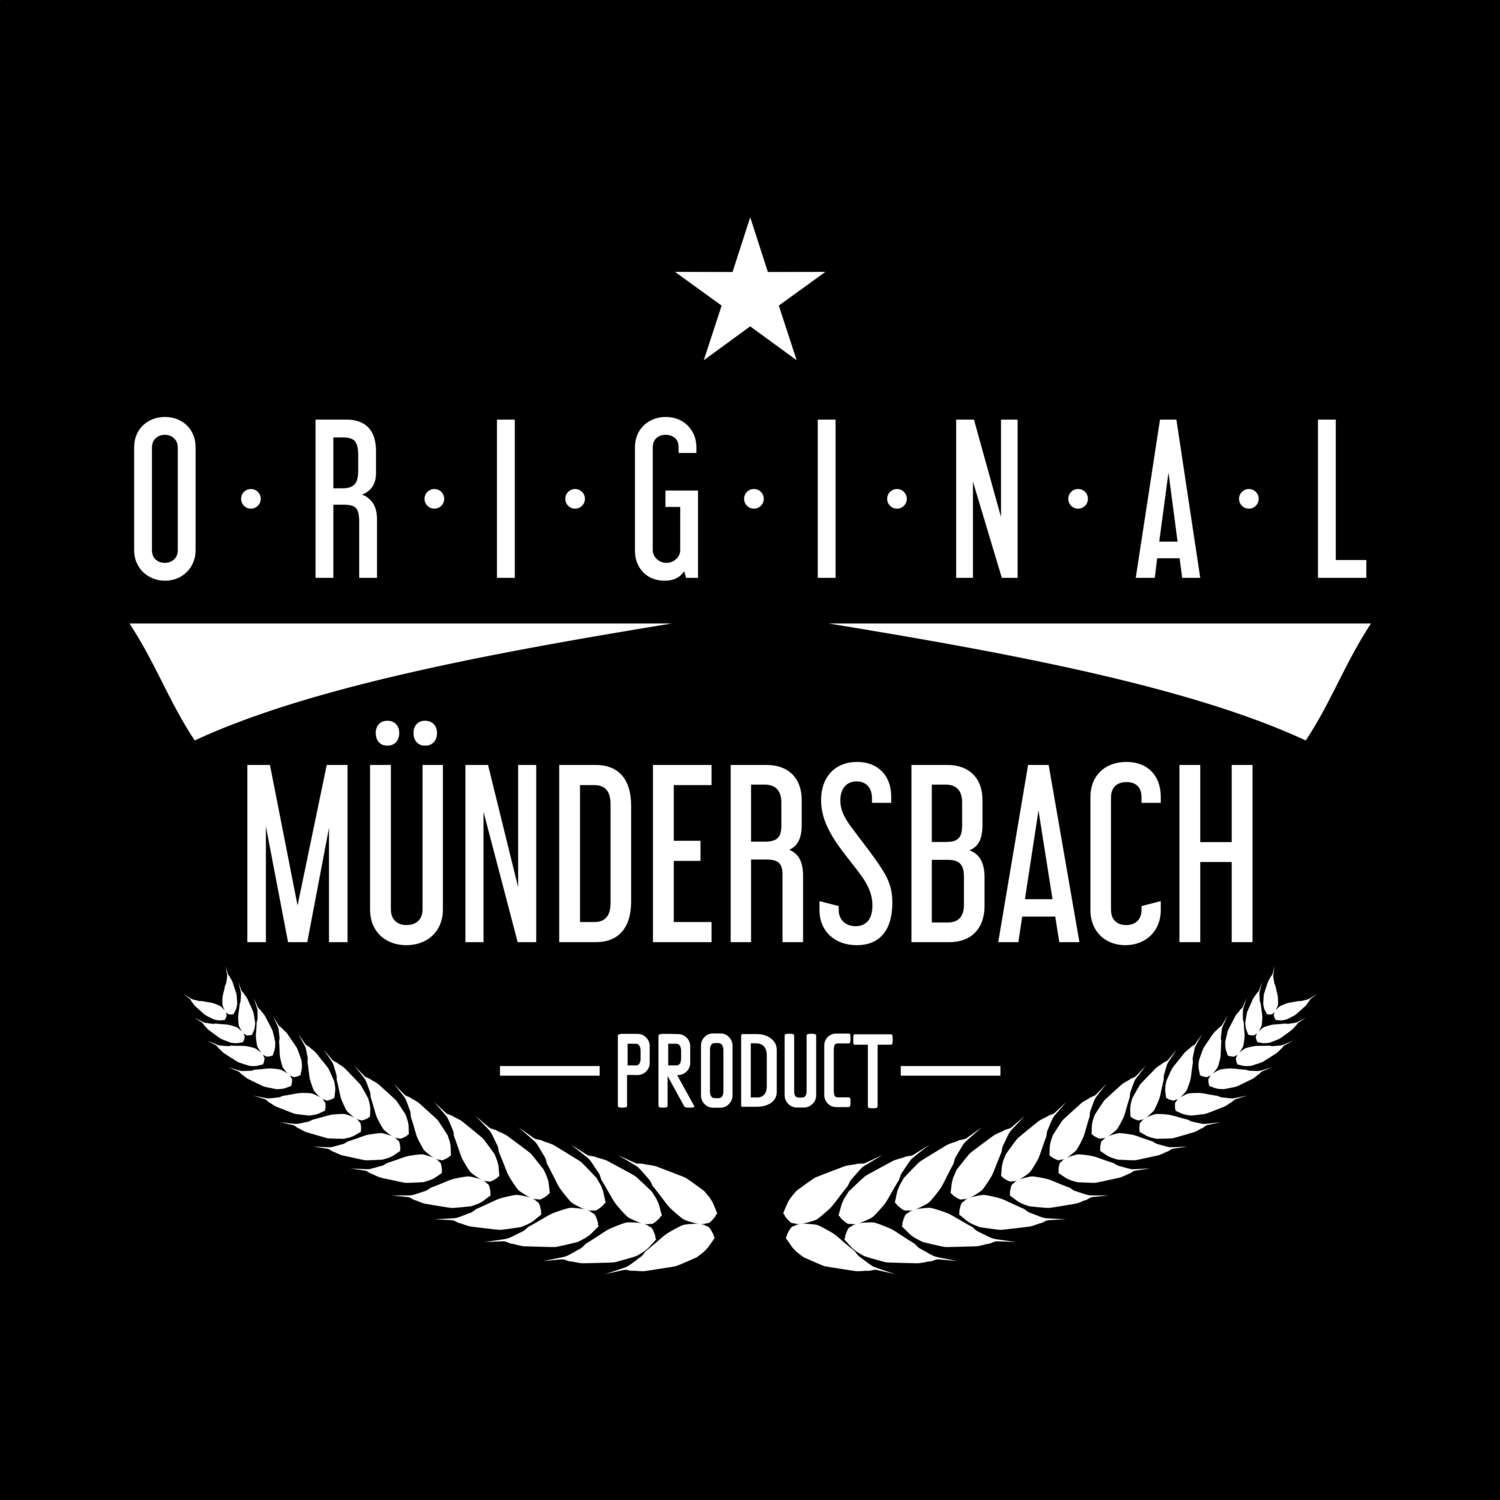 Mündersbach T-Shirt »Original Product«